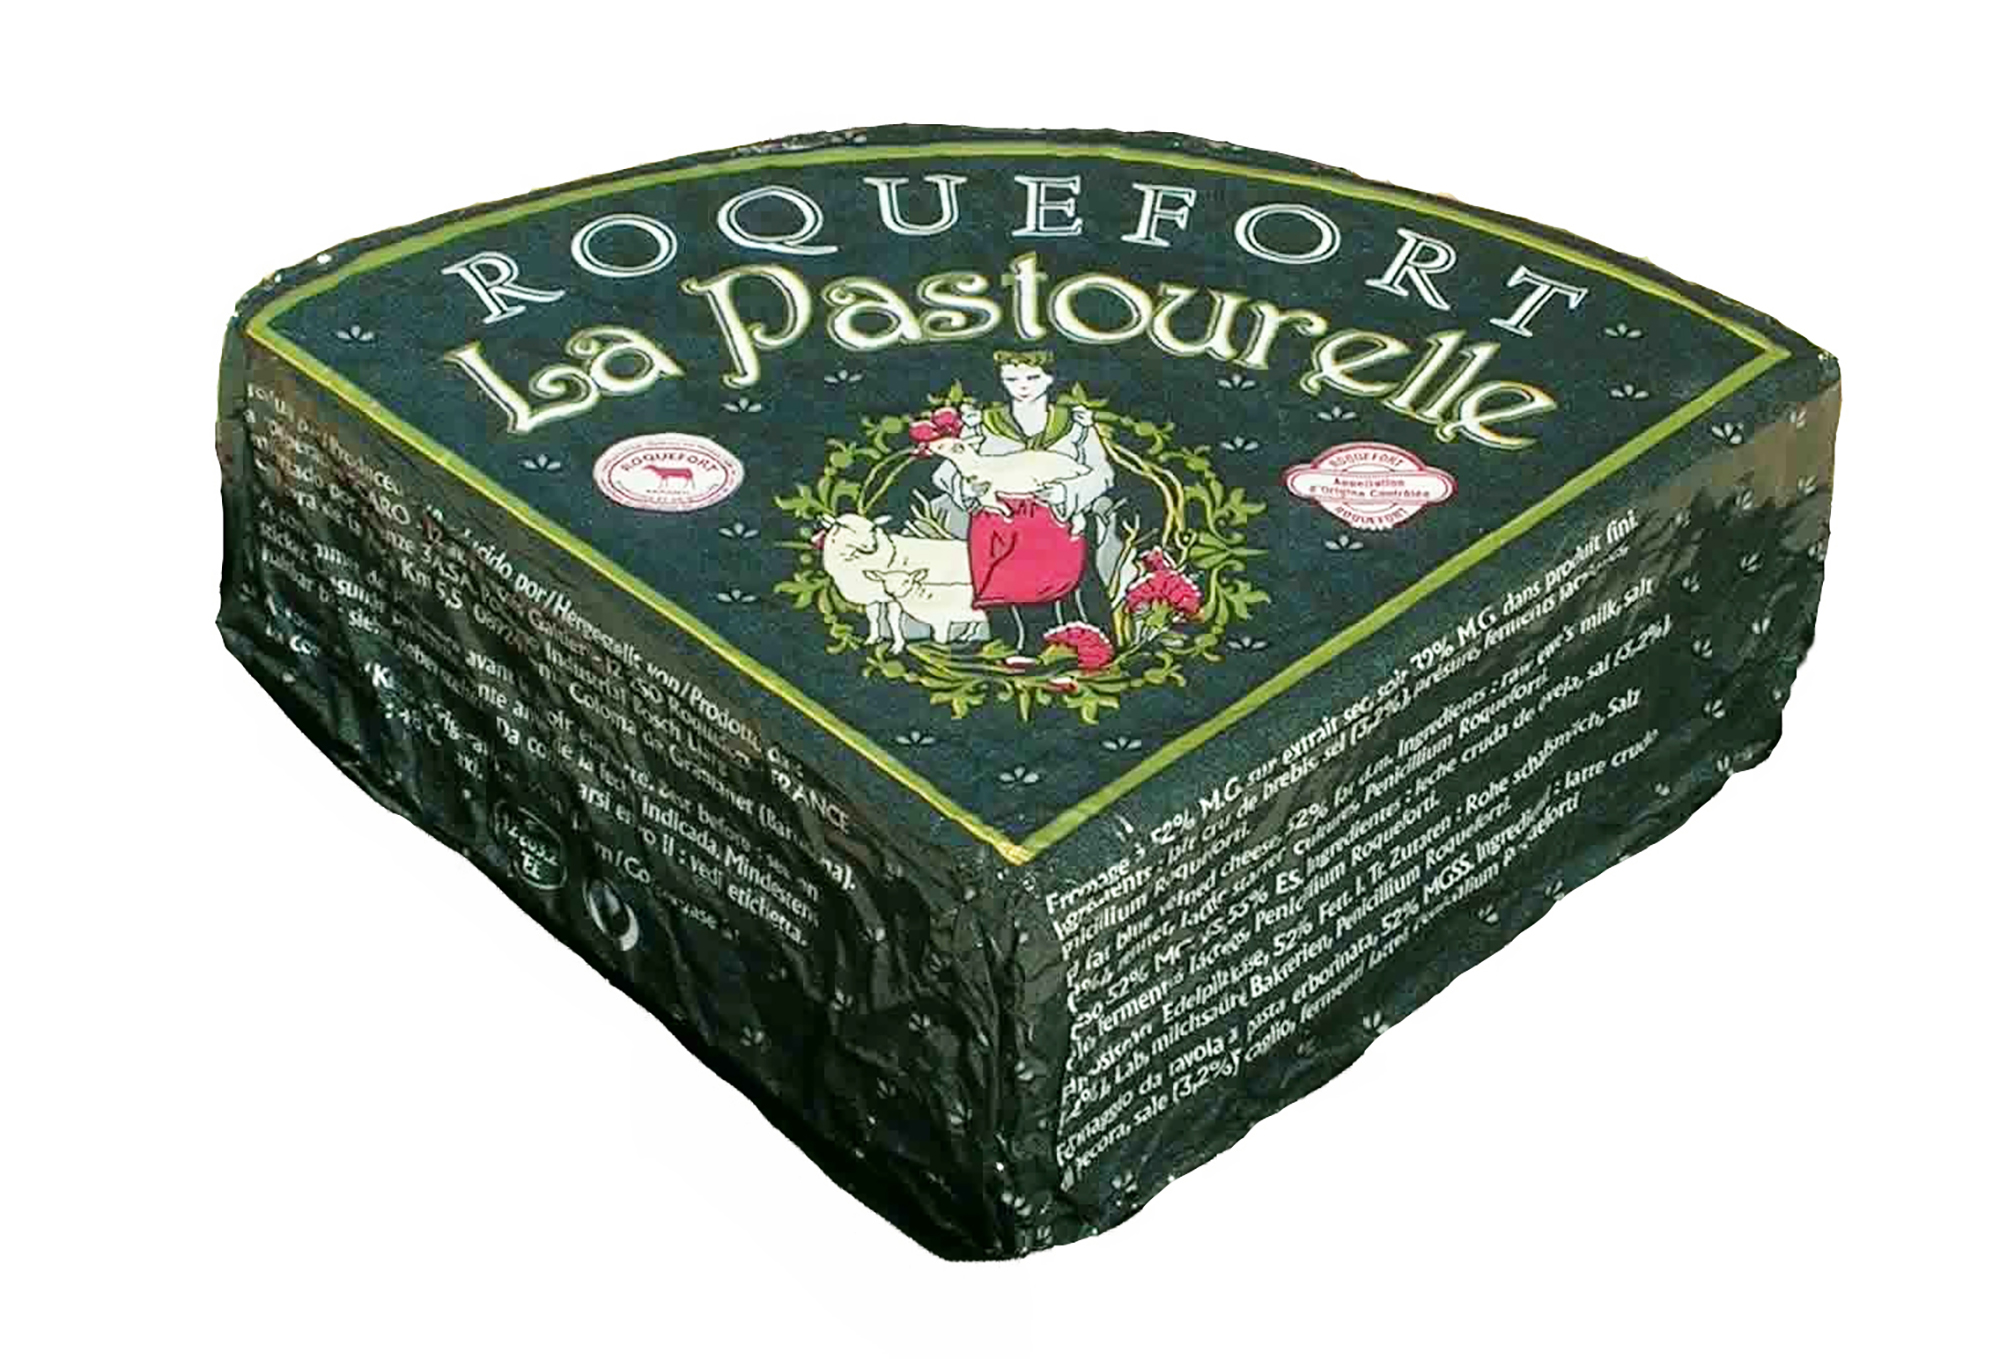 Roquefort Pastourelle AOP 330 g